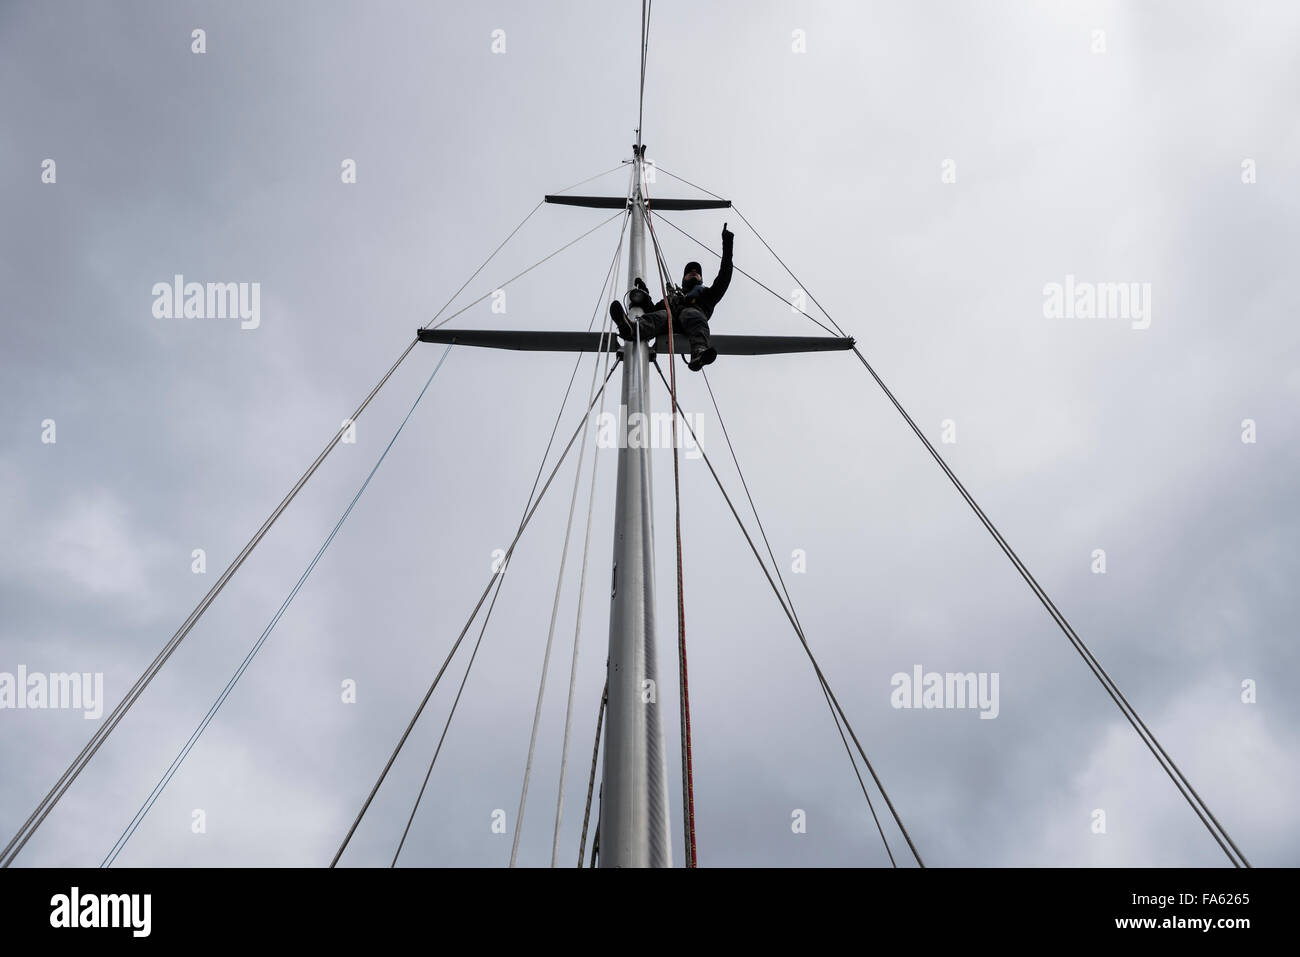 Man sitting on sailboat mast points into distance Stock Photo